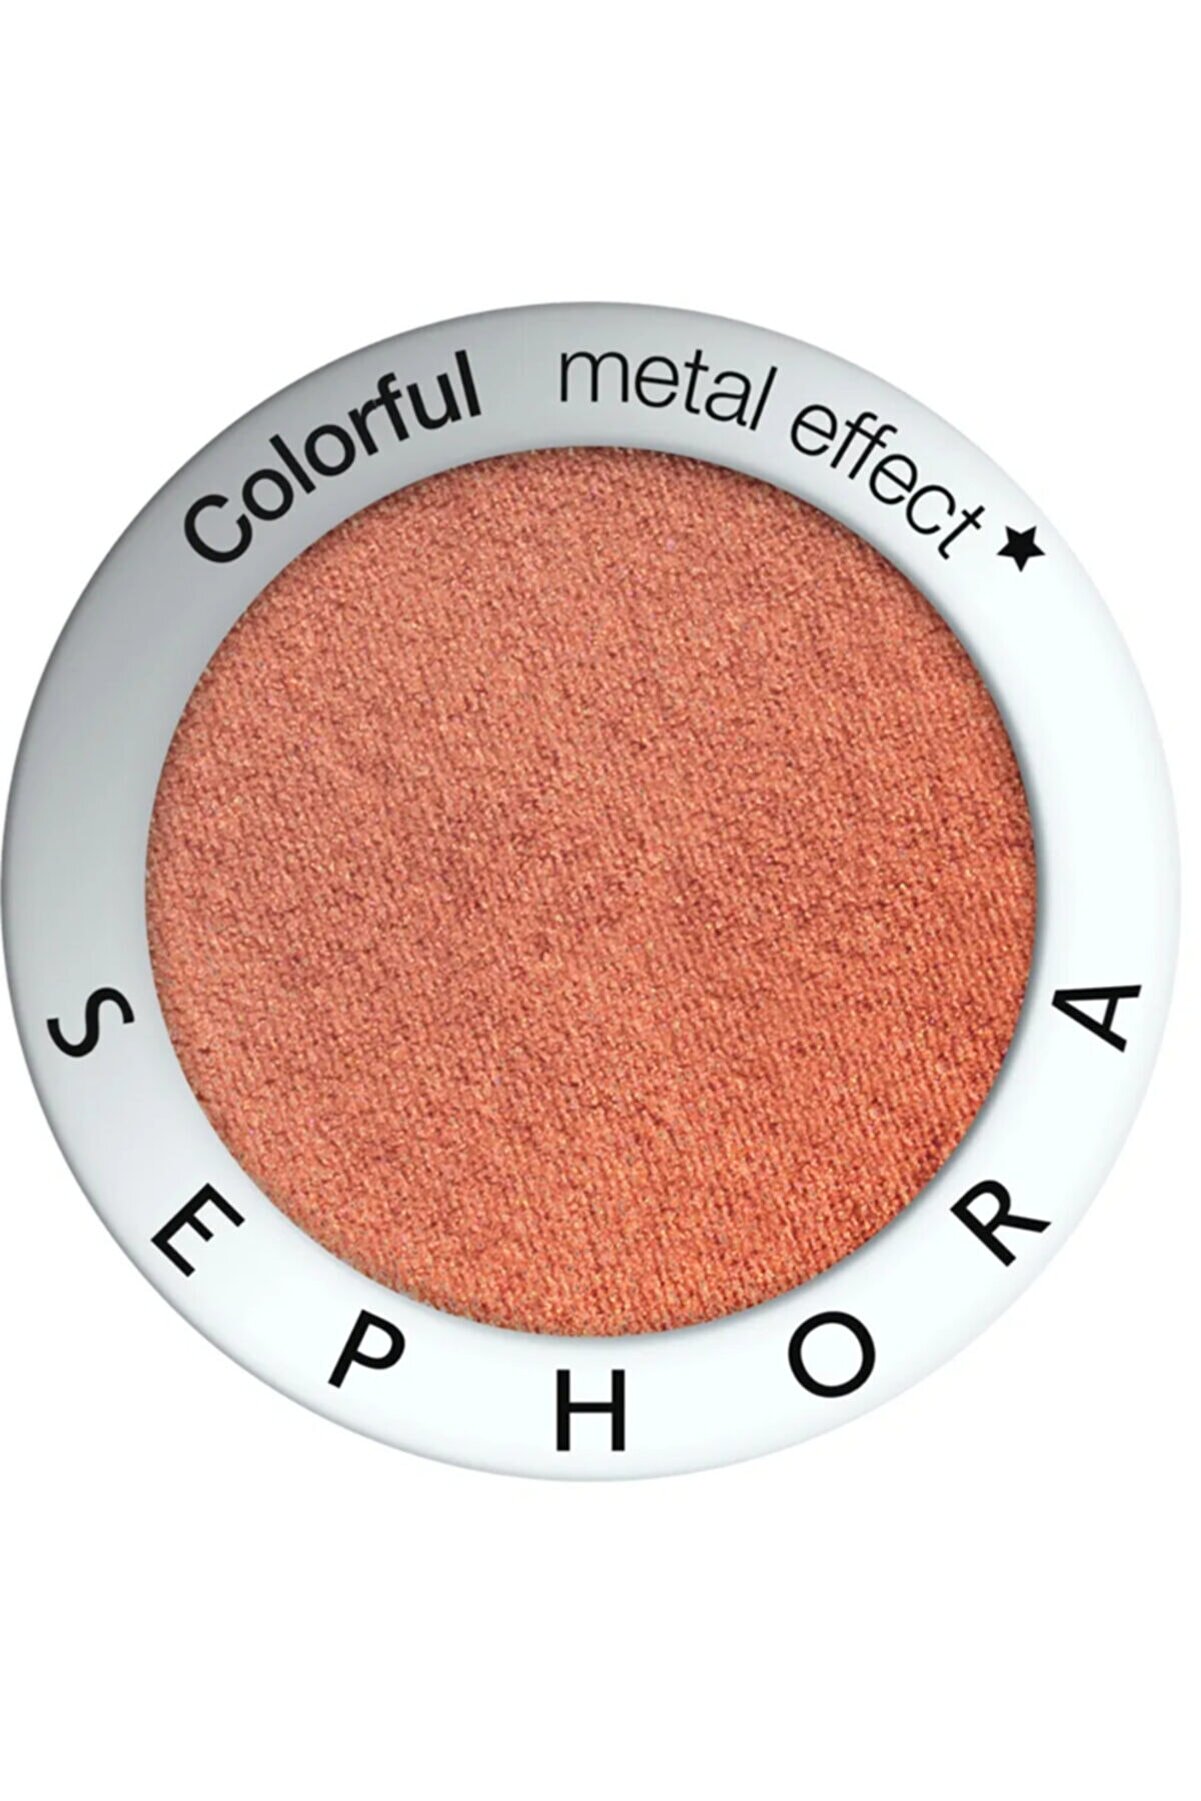 Sephora Colorful Magnetic Eyeshadow